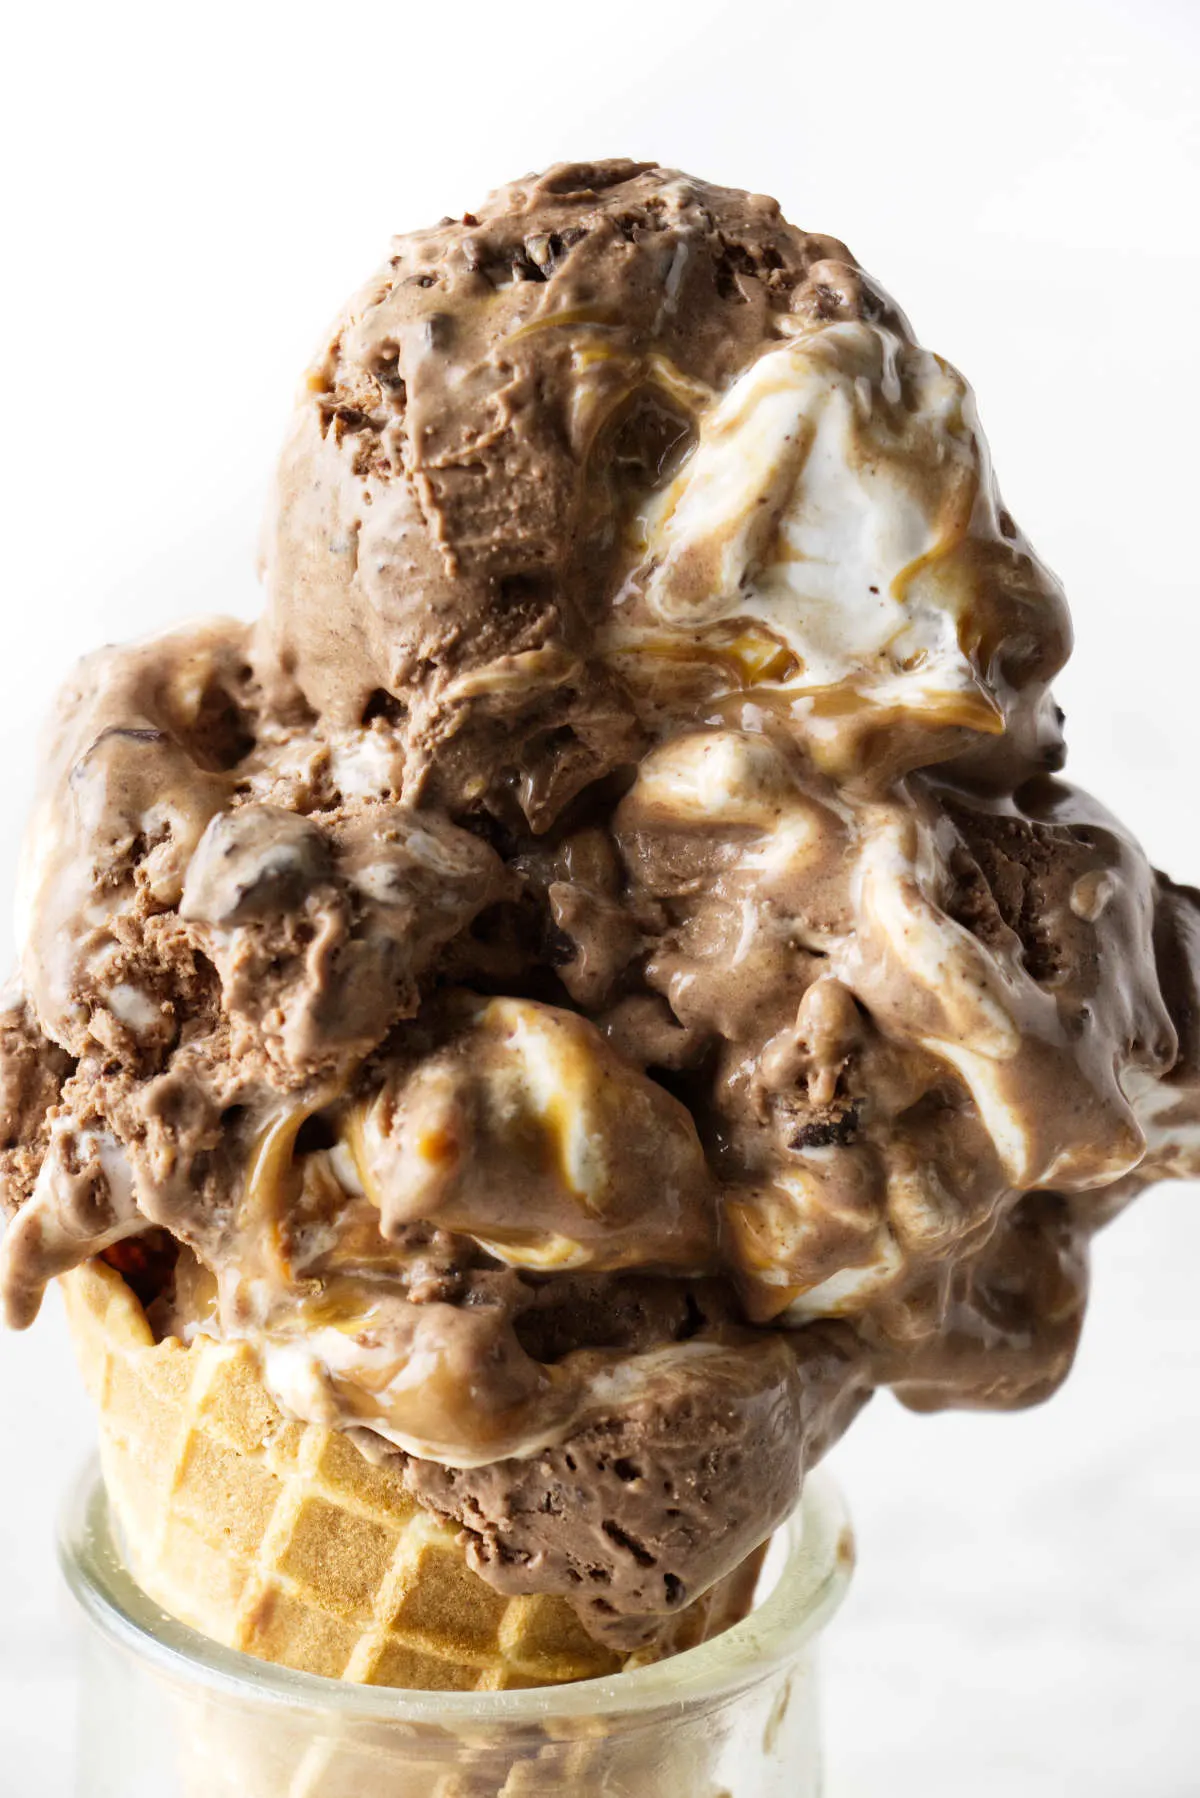 Chocolate marshmallow ice cream on a sugar cone.